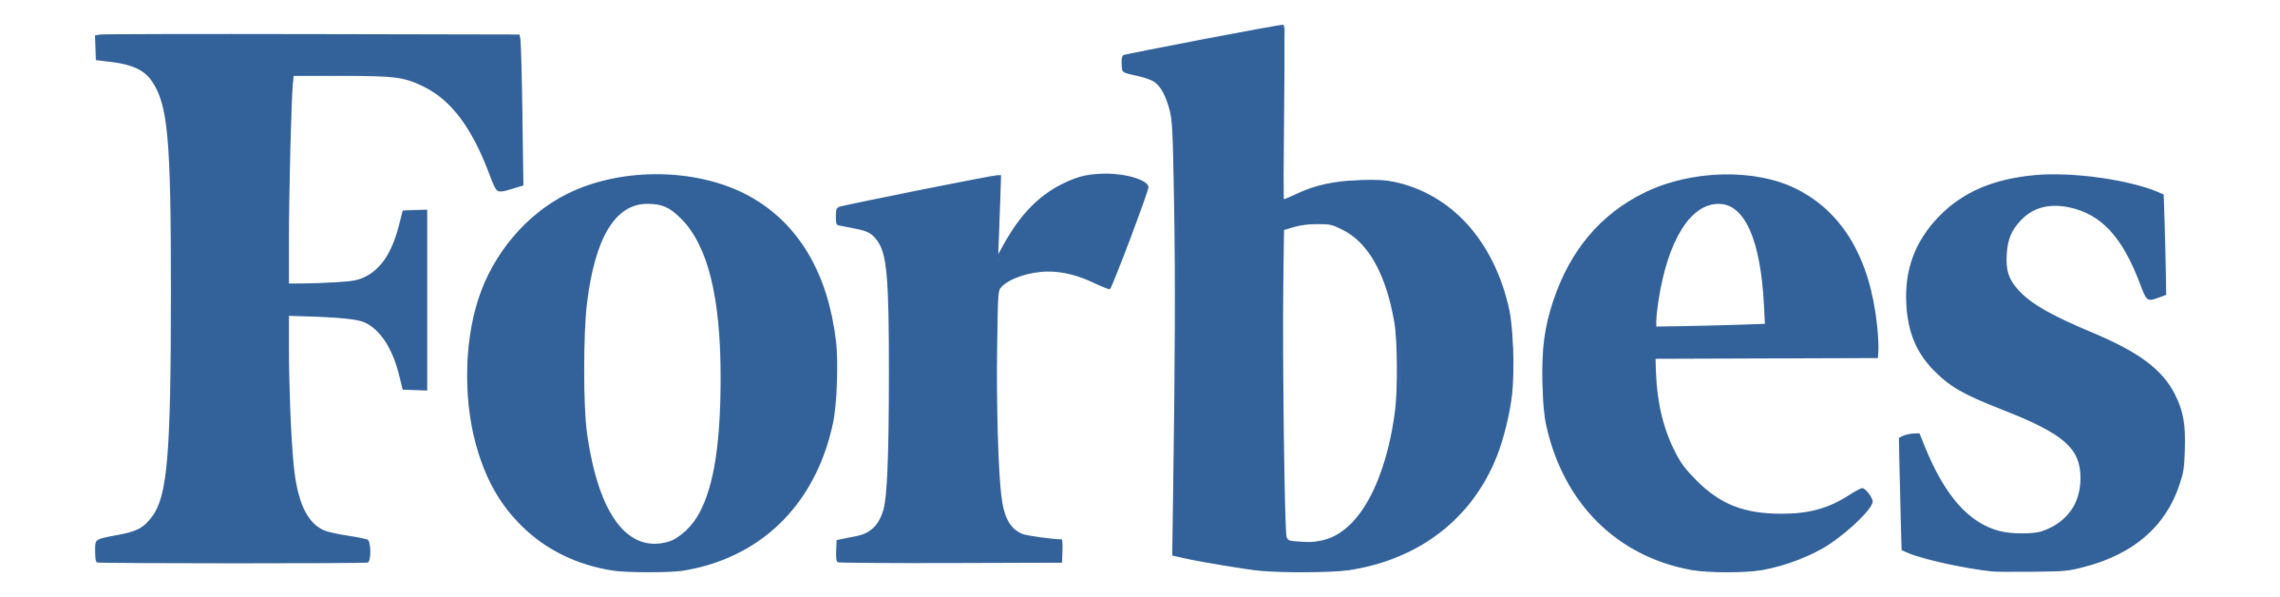 Forbes Logo PNG File